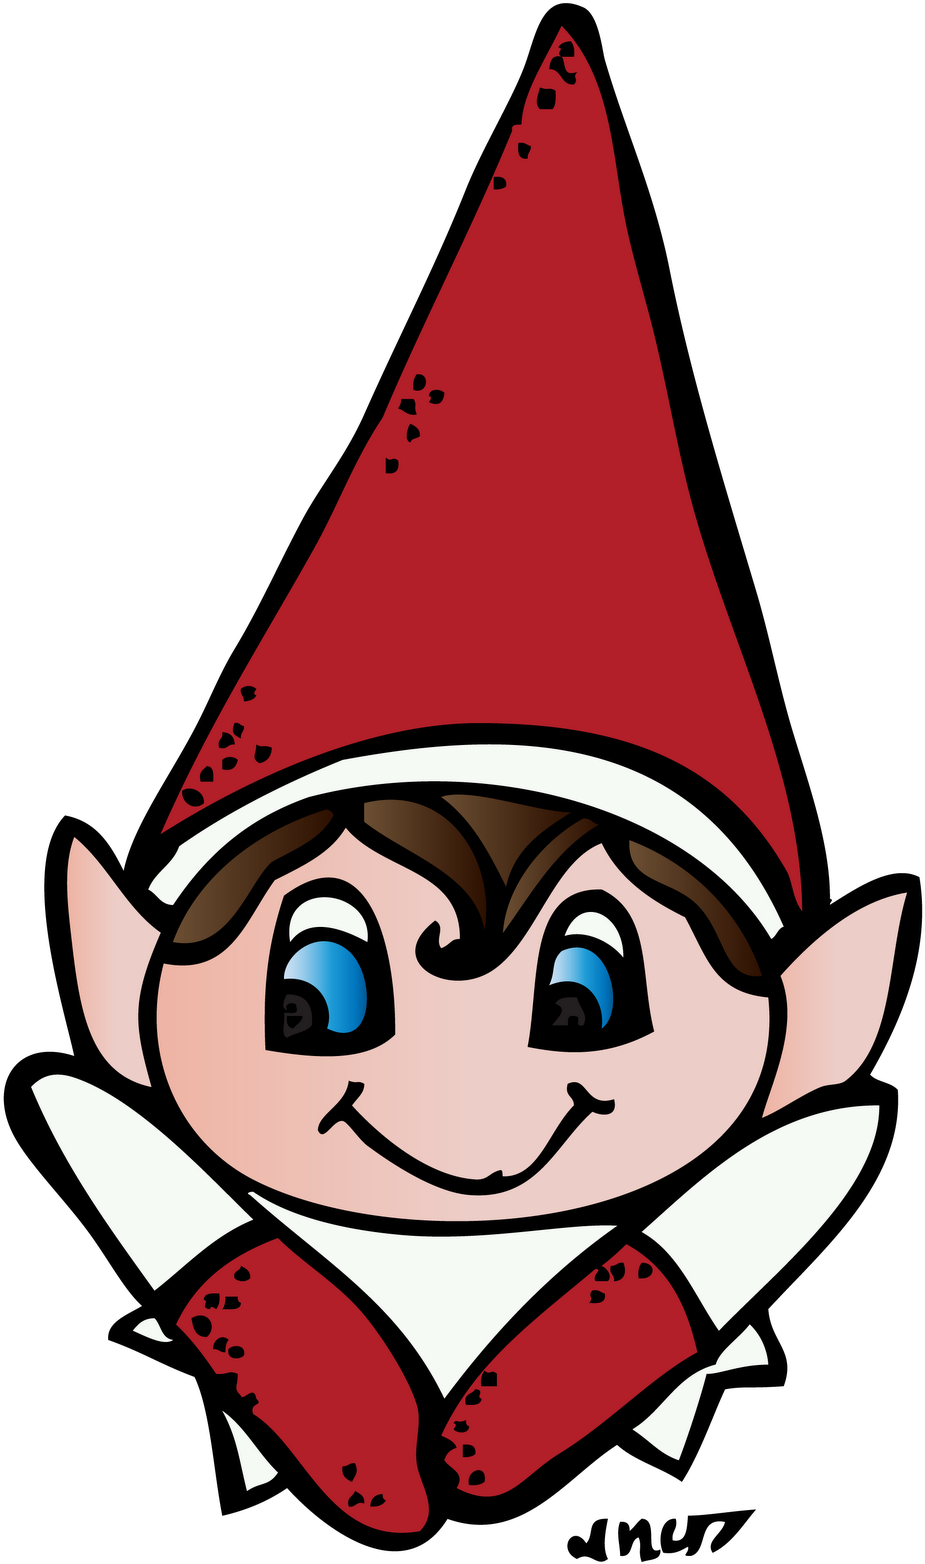 Cheerful Elf On The Shelf Cartoon PNG